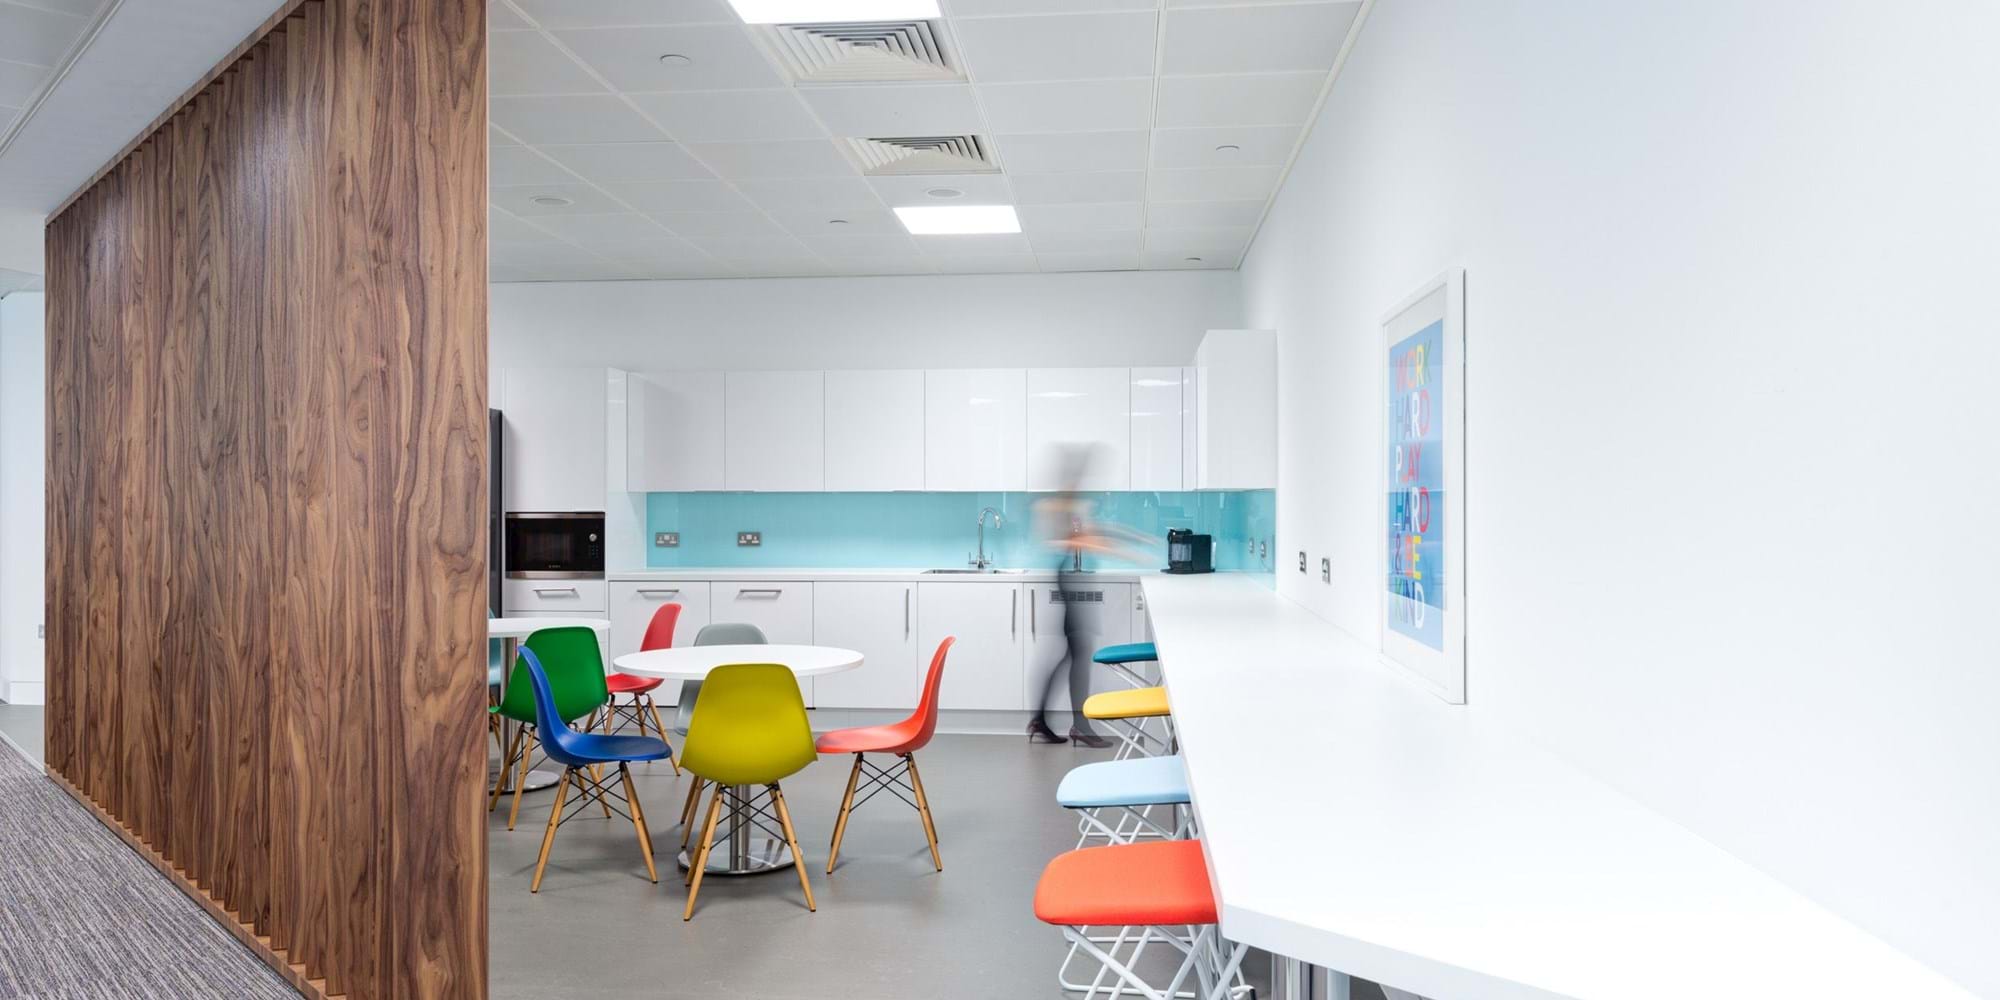 Modus Workspace office design, fit out and refurbishment - Freeths - Freeths 05 highres sRGB.jpg